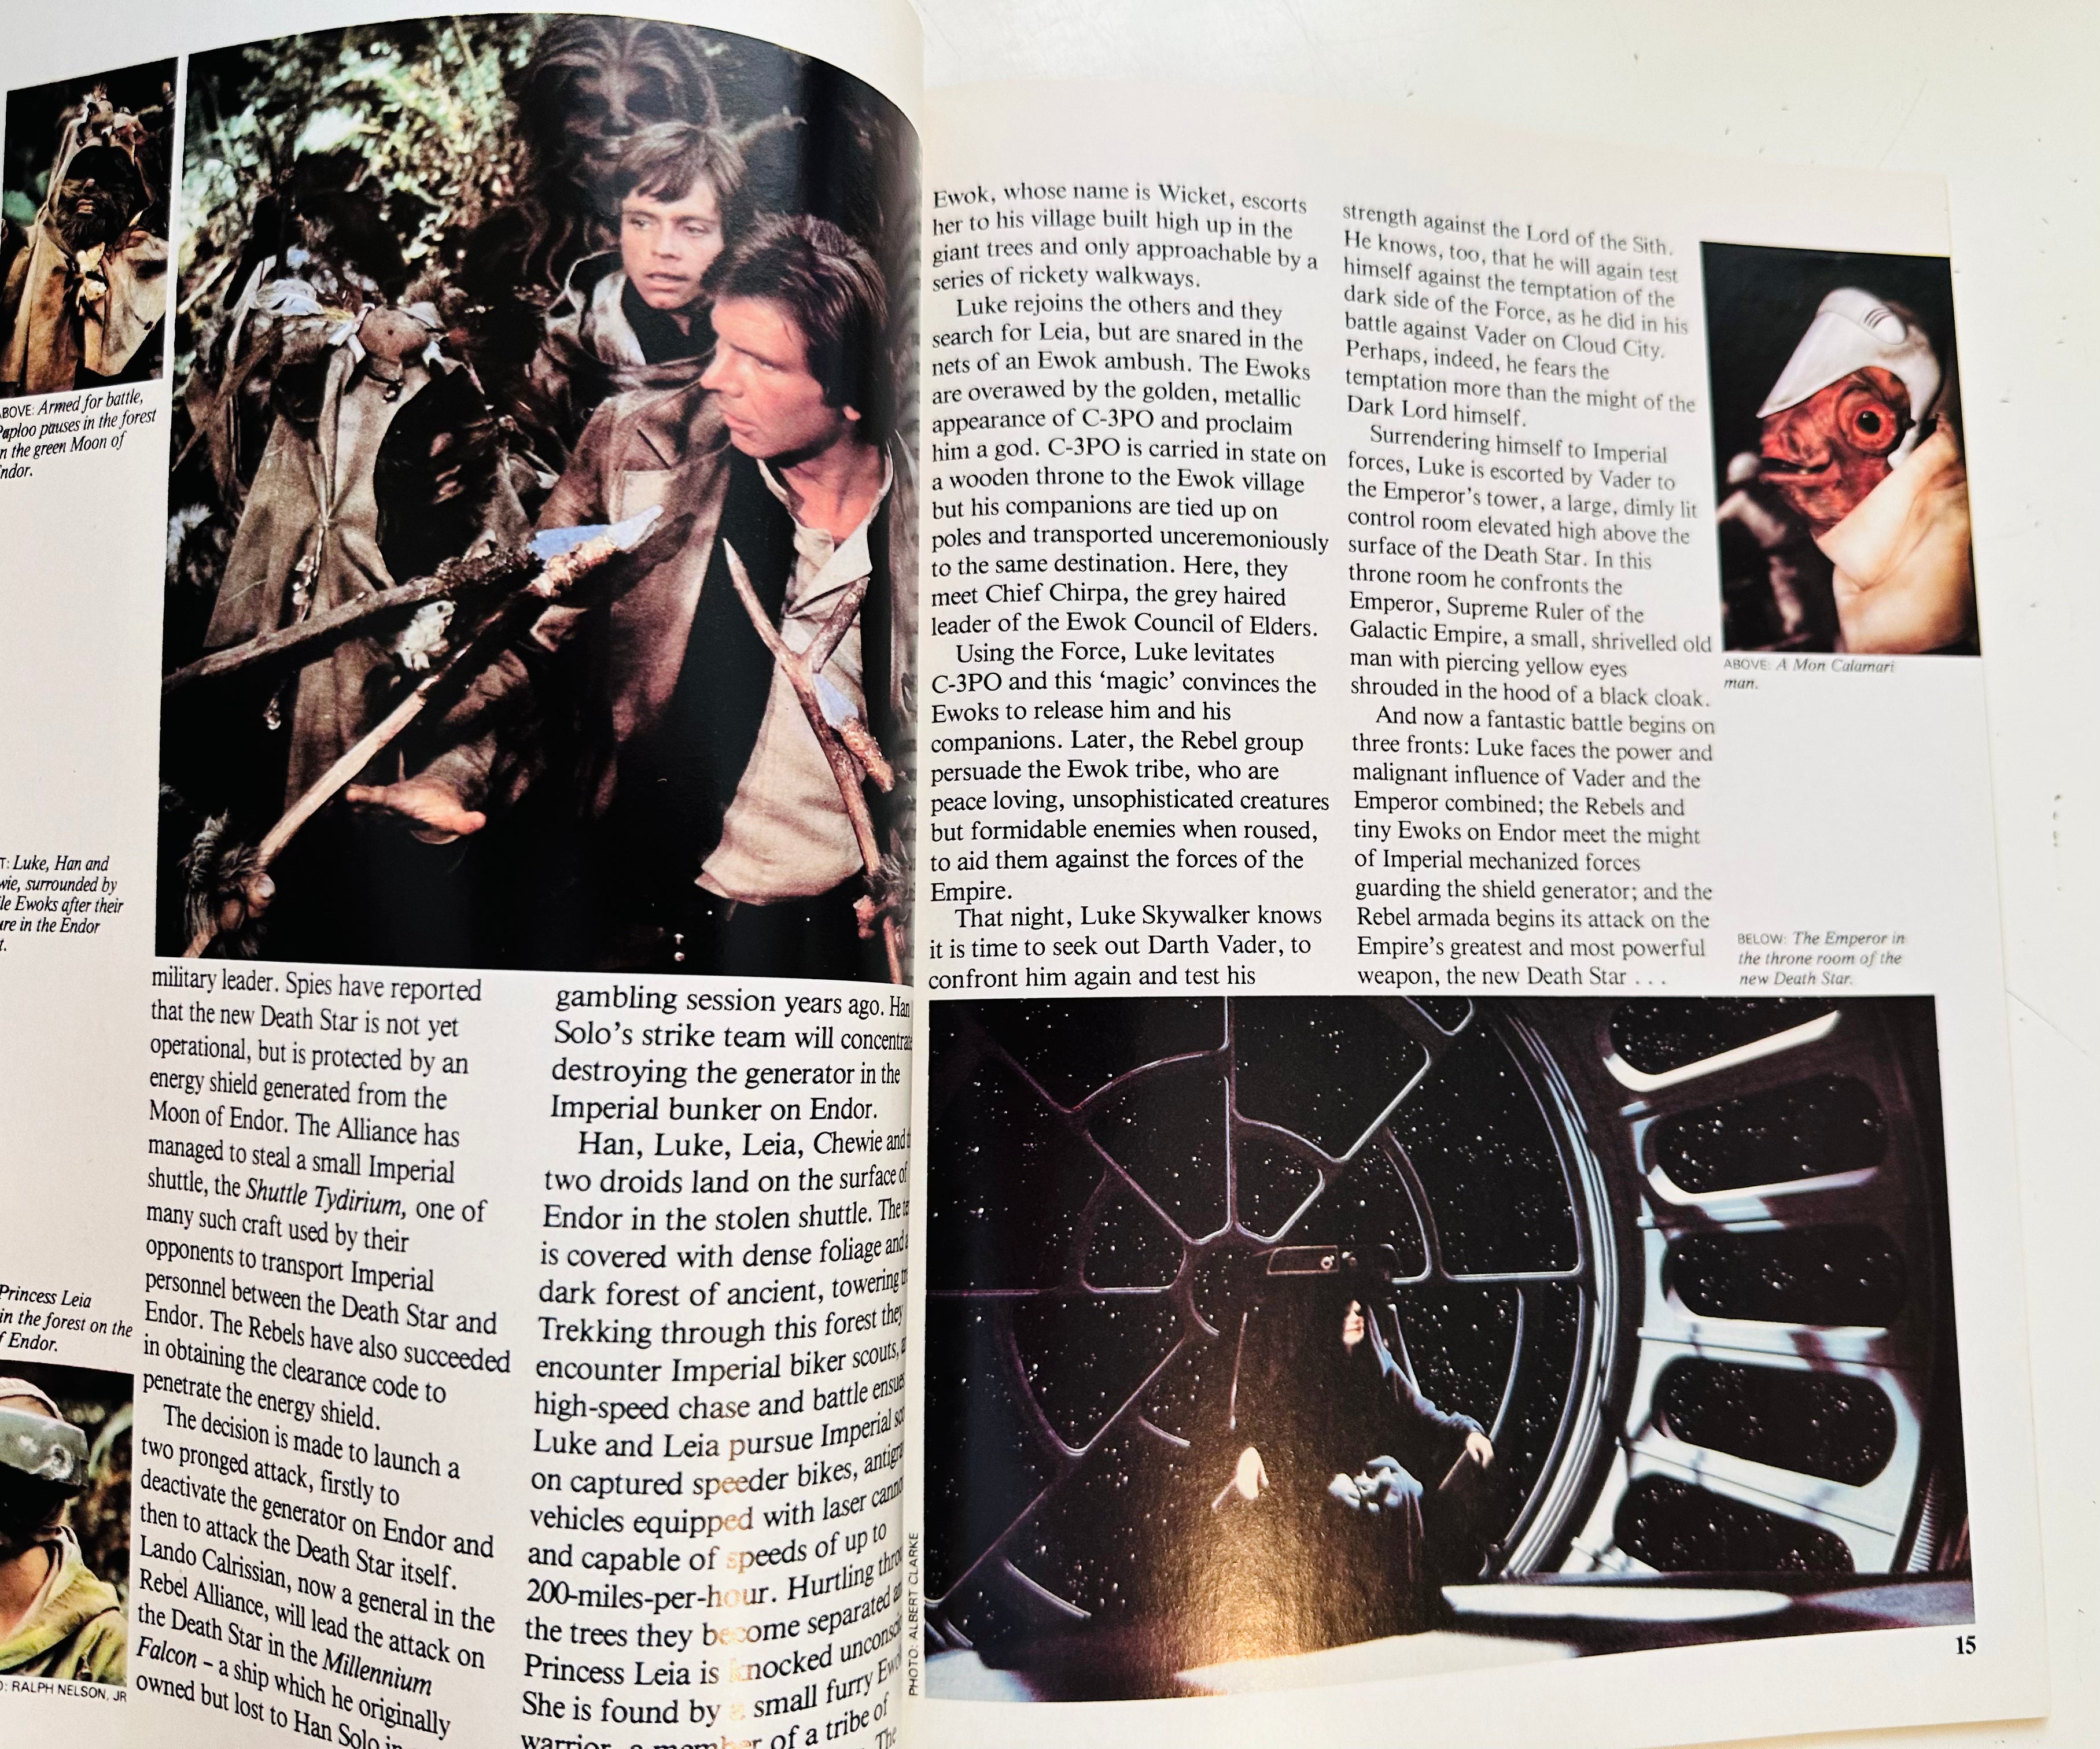 Star Wars Return of the Jedi collectors edition soft cover book 1983